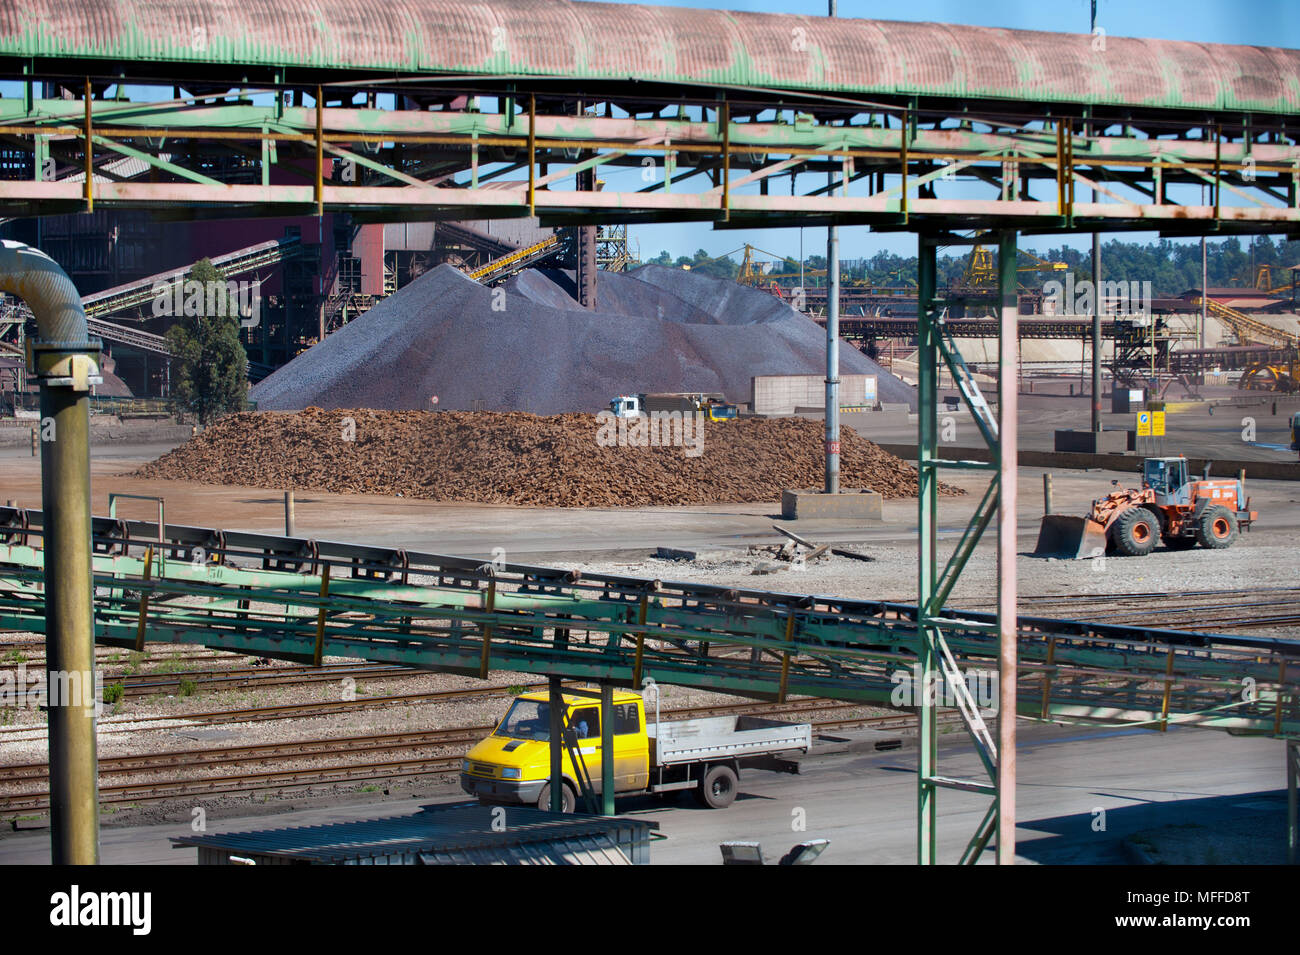 Taranto. ILVA steel factory, mineral site. Italy. Stock Photo